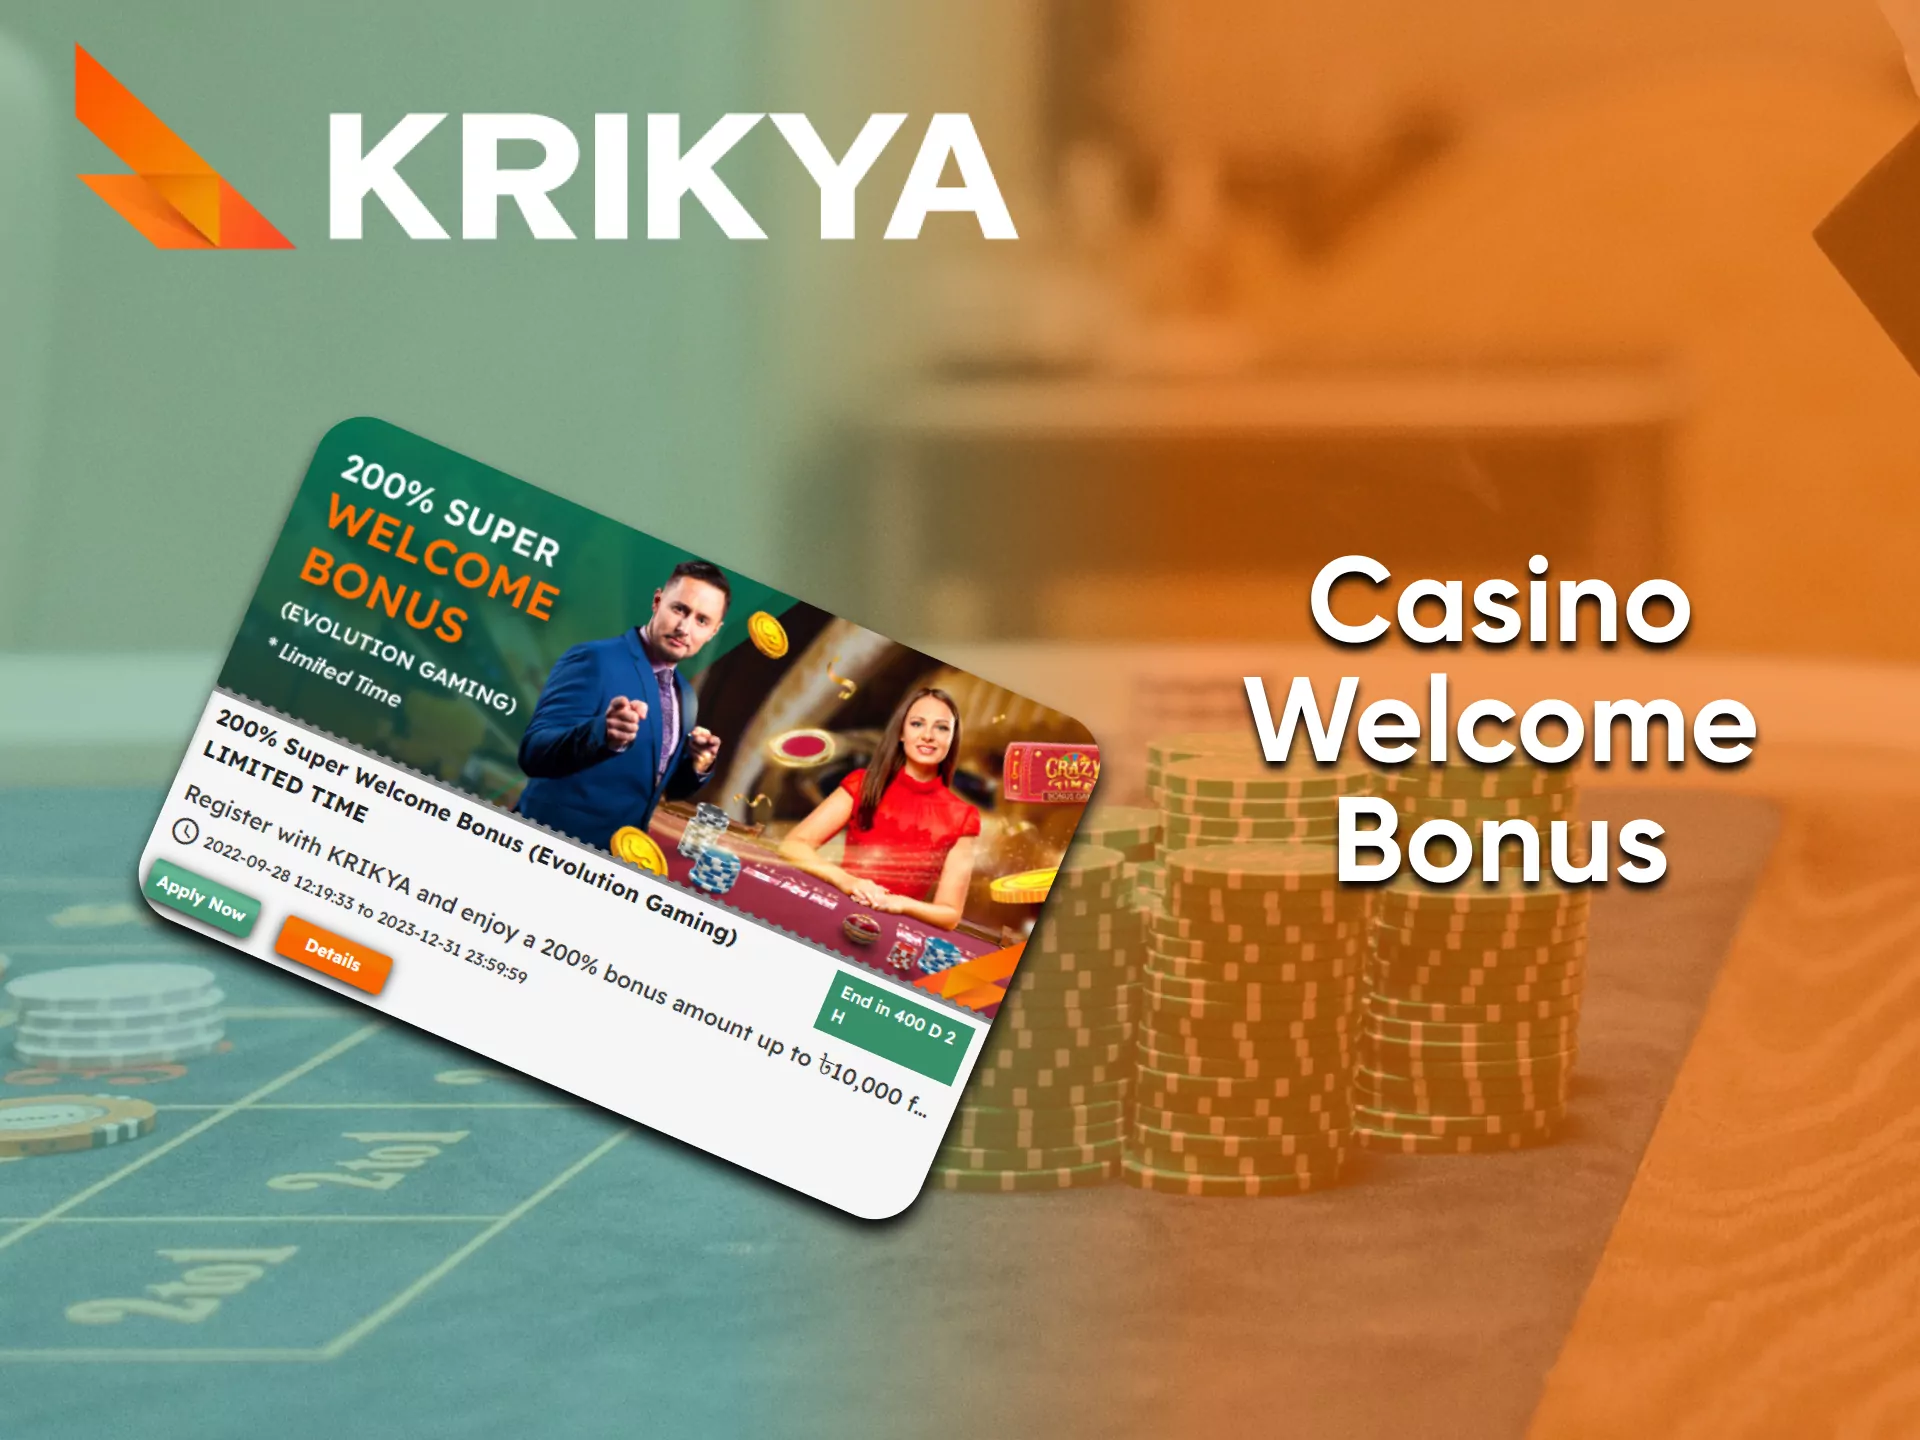 When you use Krikya to play casino games, you get bonuses.